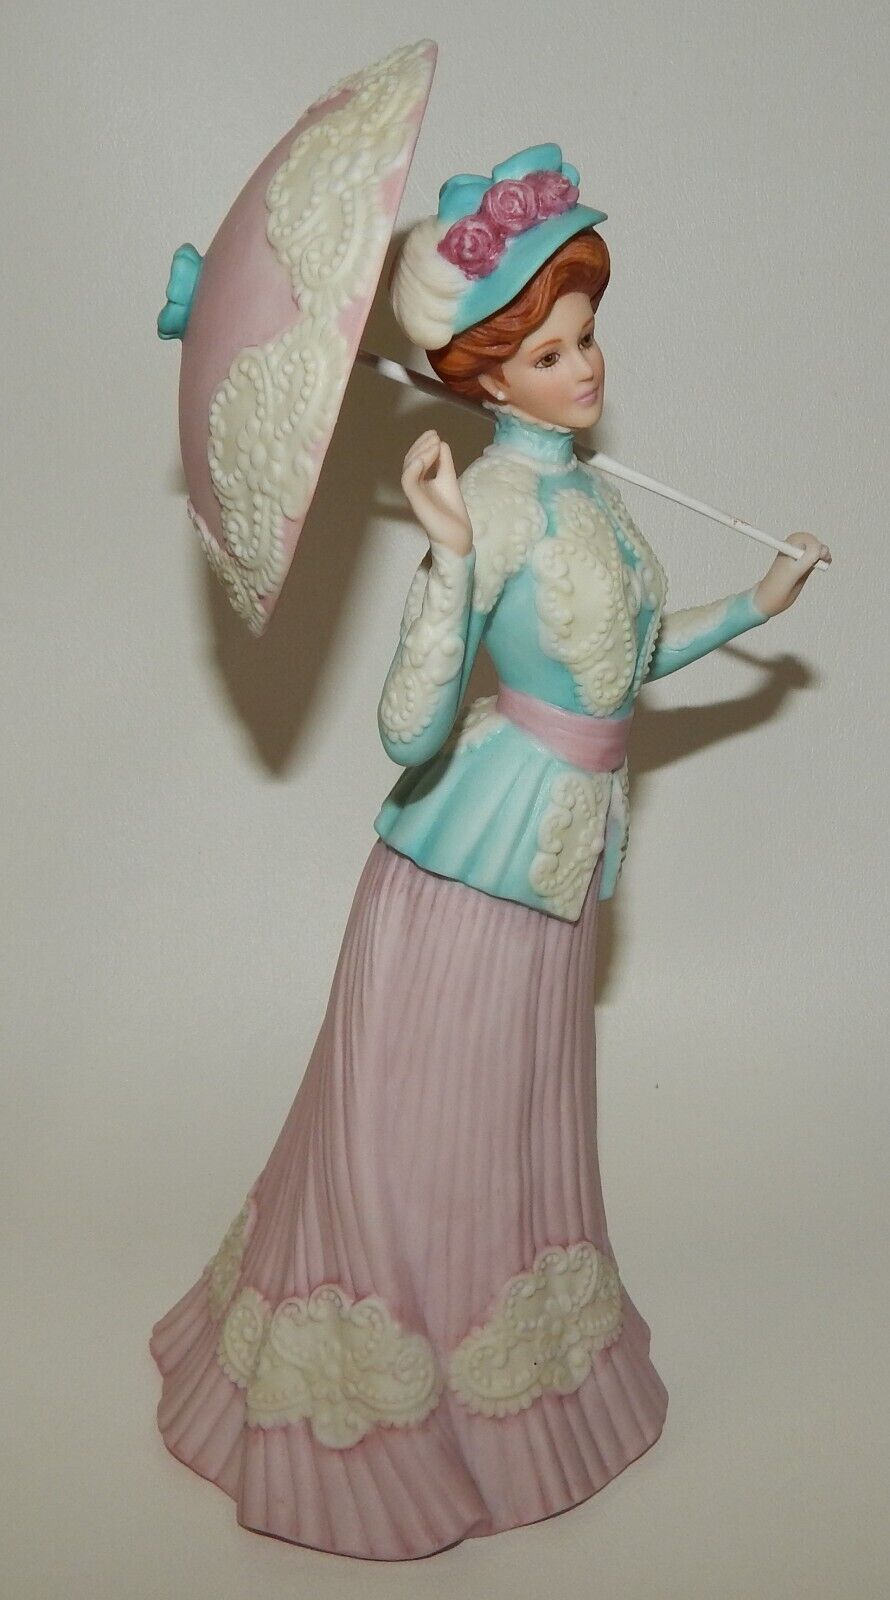 Gorham Porcelain Figurine - Sunday Promenade - Lady with Parasol